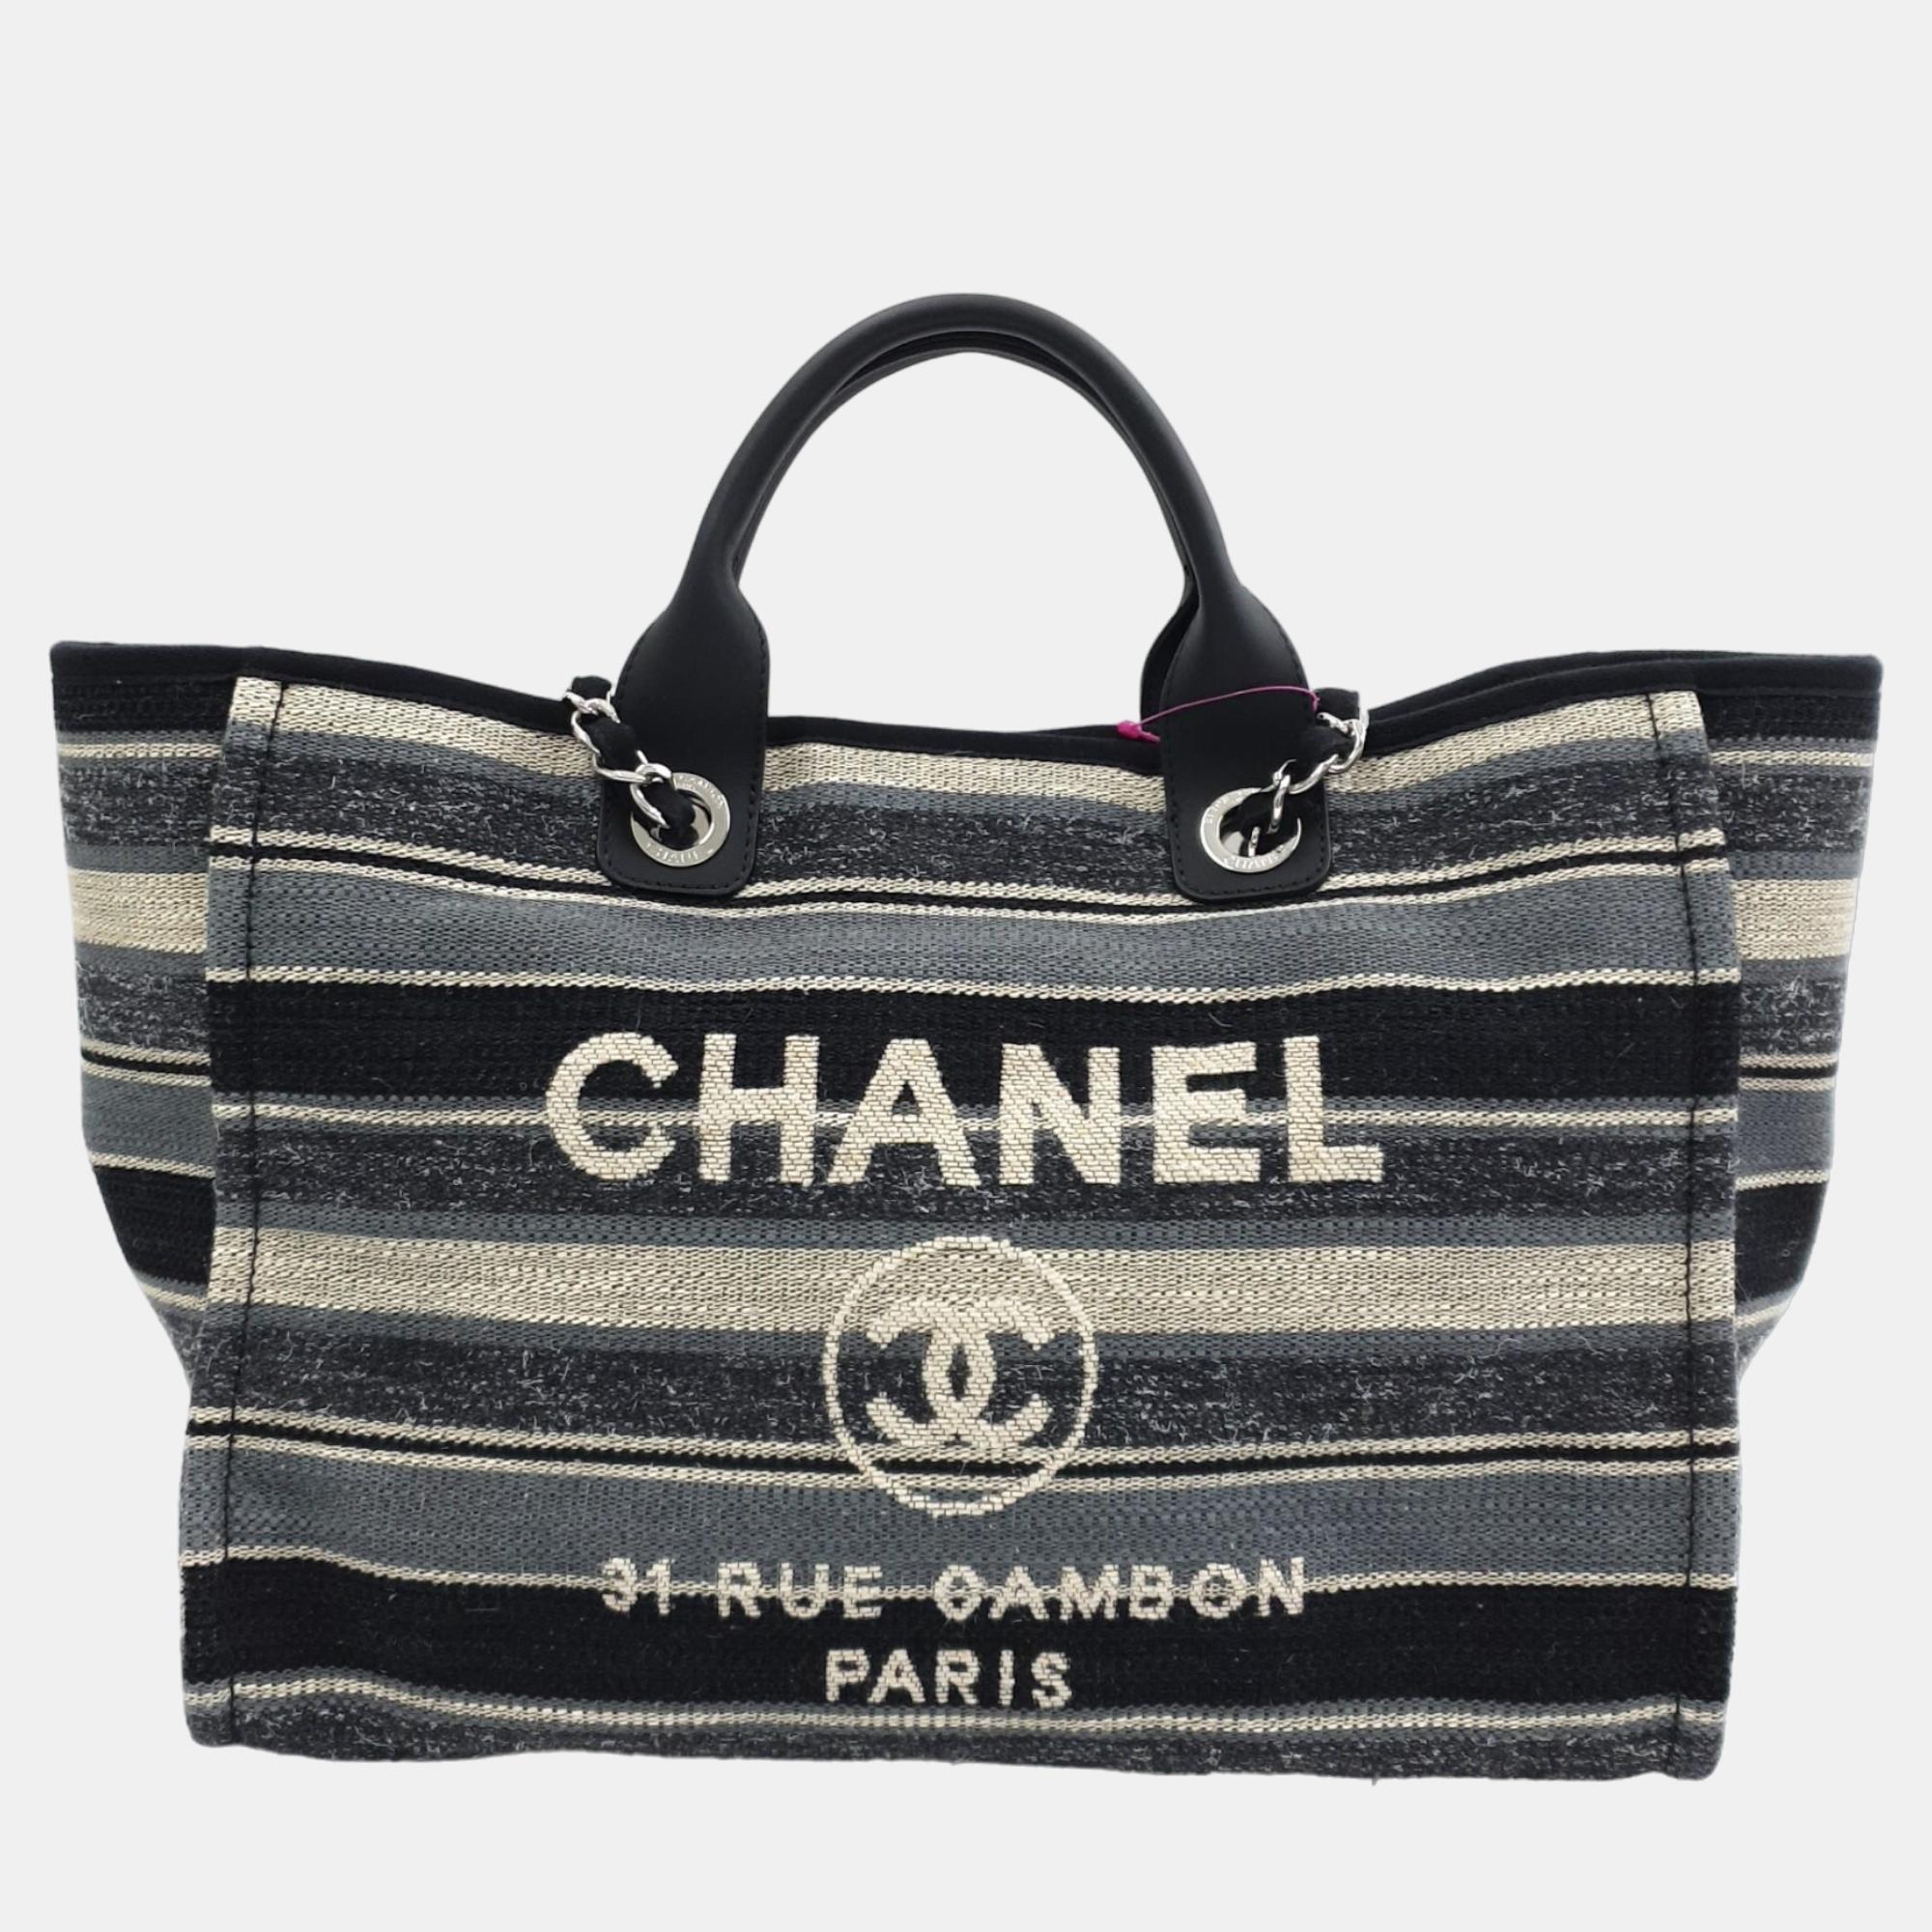 Chanel Grey Canvas Medium Deauville Tote Bag